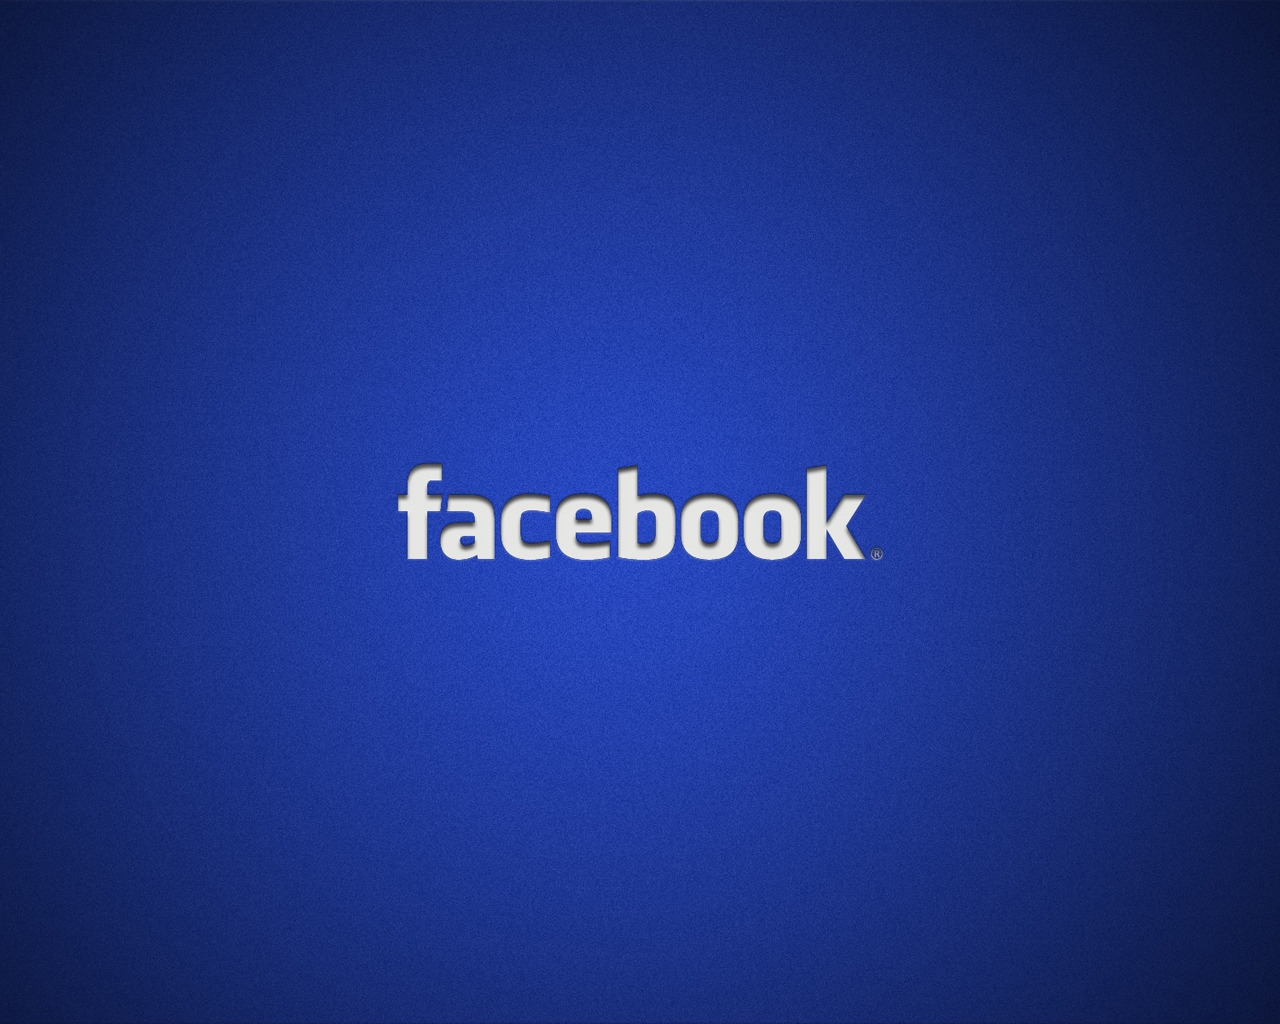 Facebook Logo for 1280 x 1024 resolution